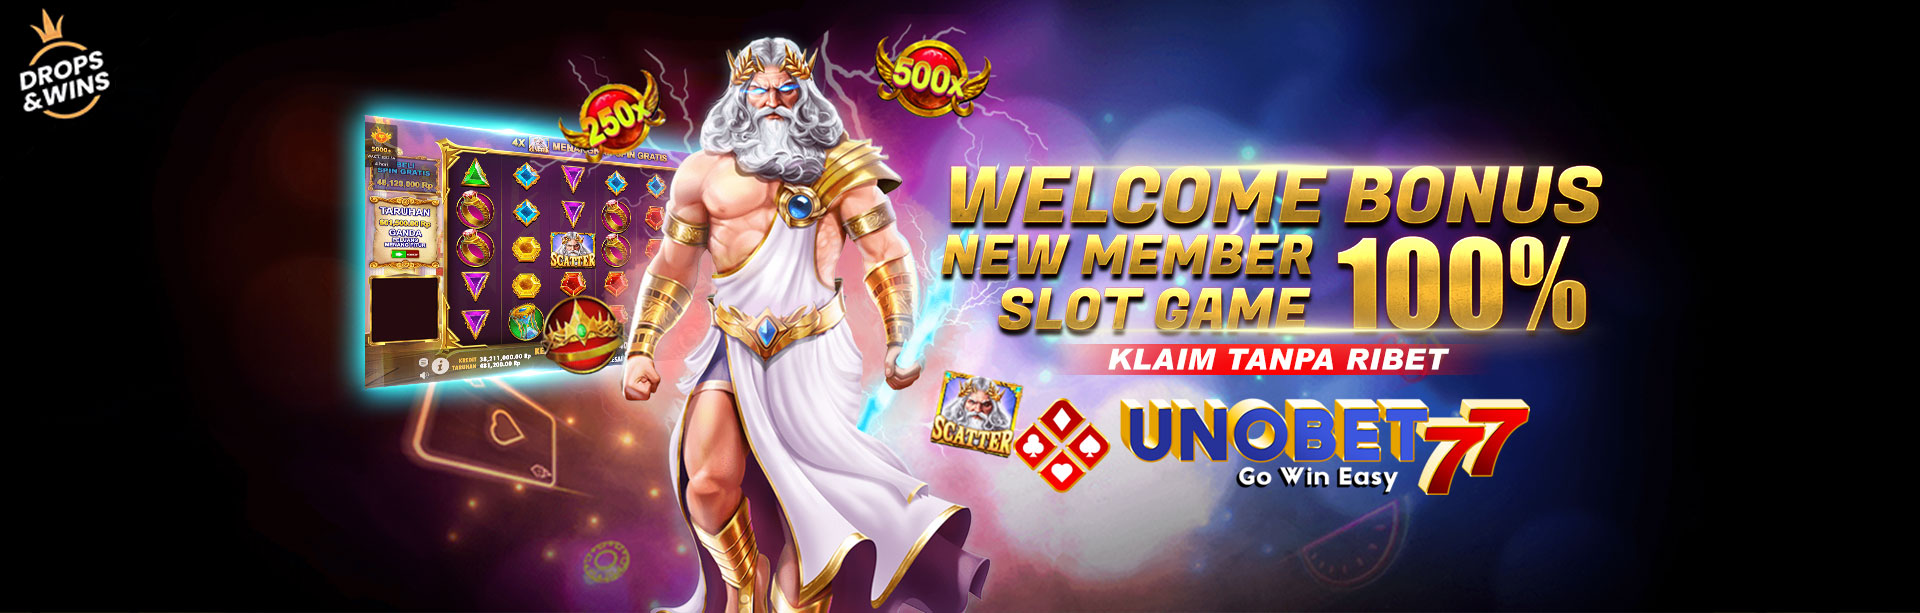 Promo Bonus Deposit Slot Online New Member 100% Unobet77